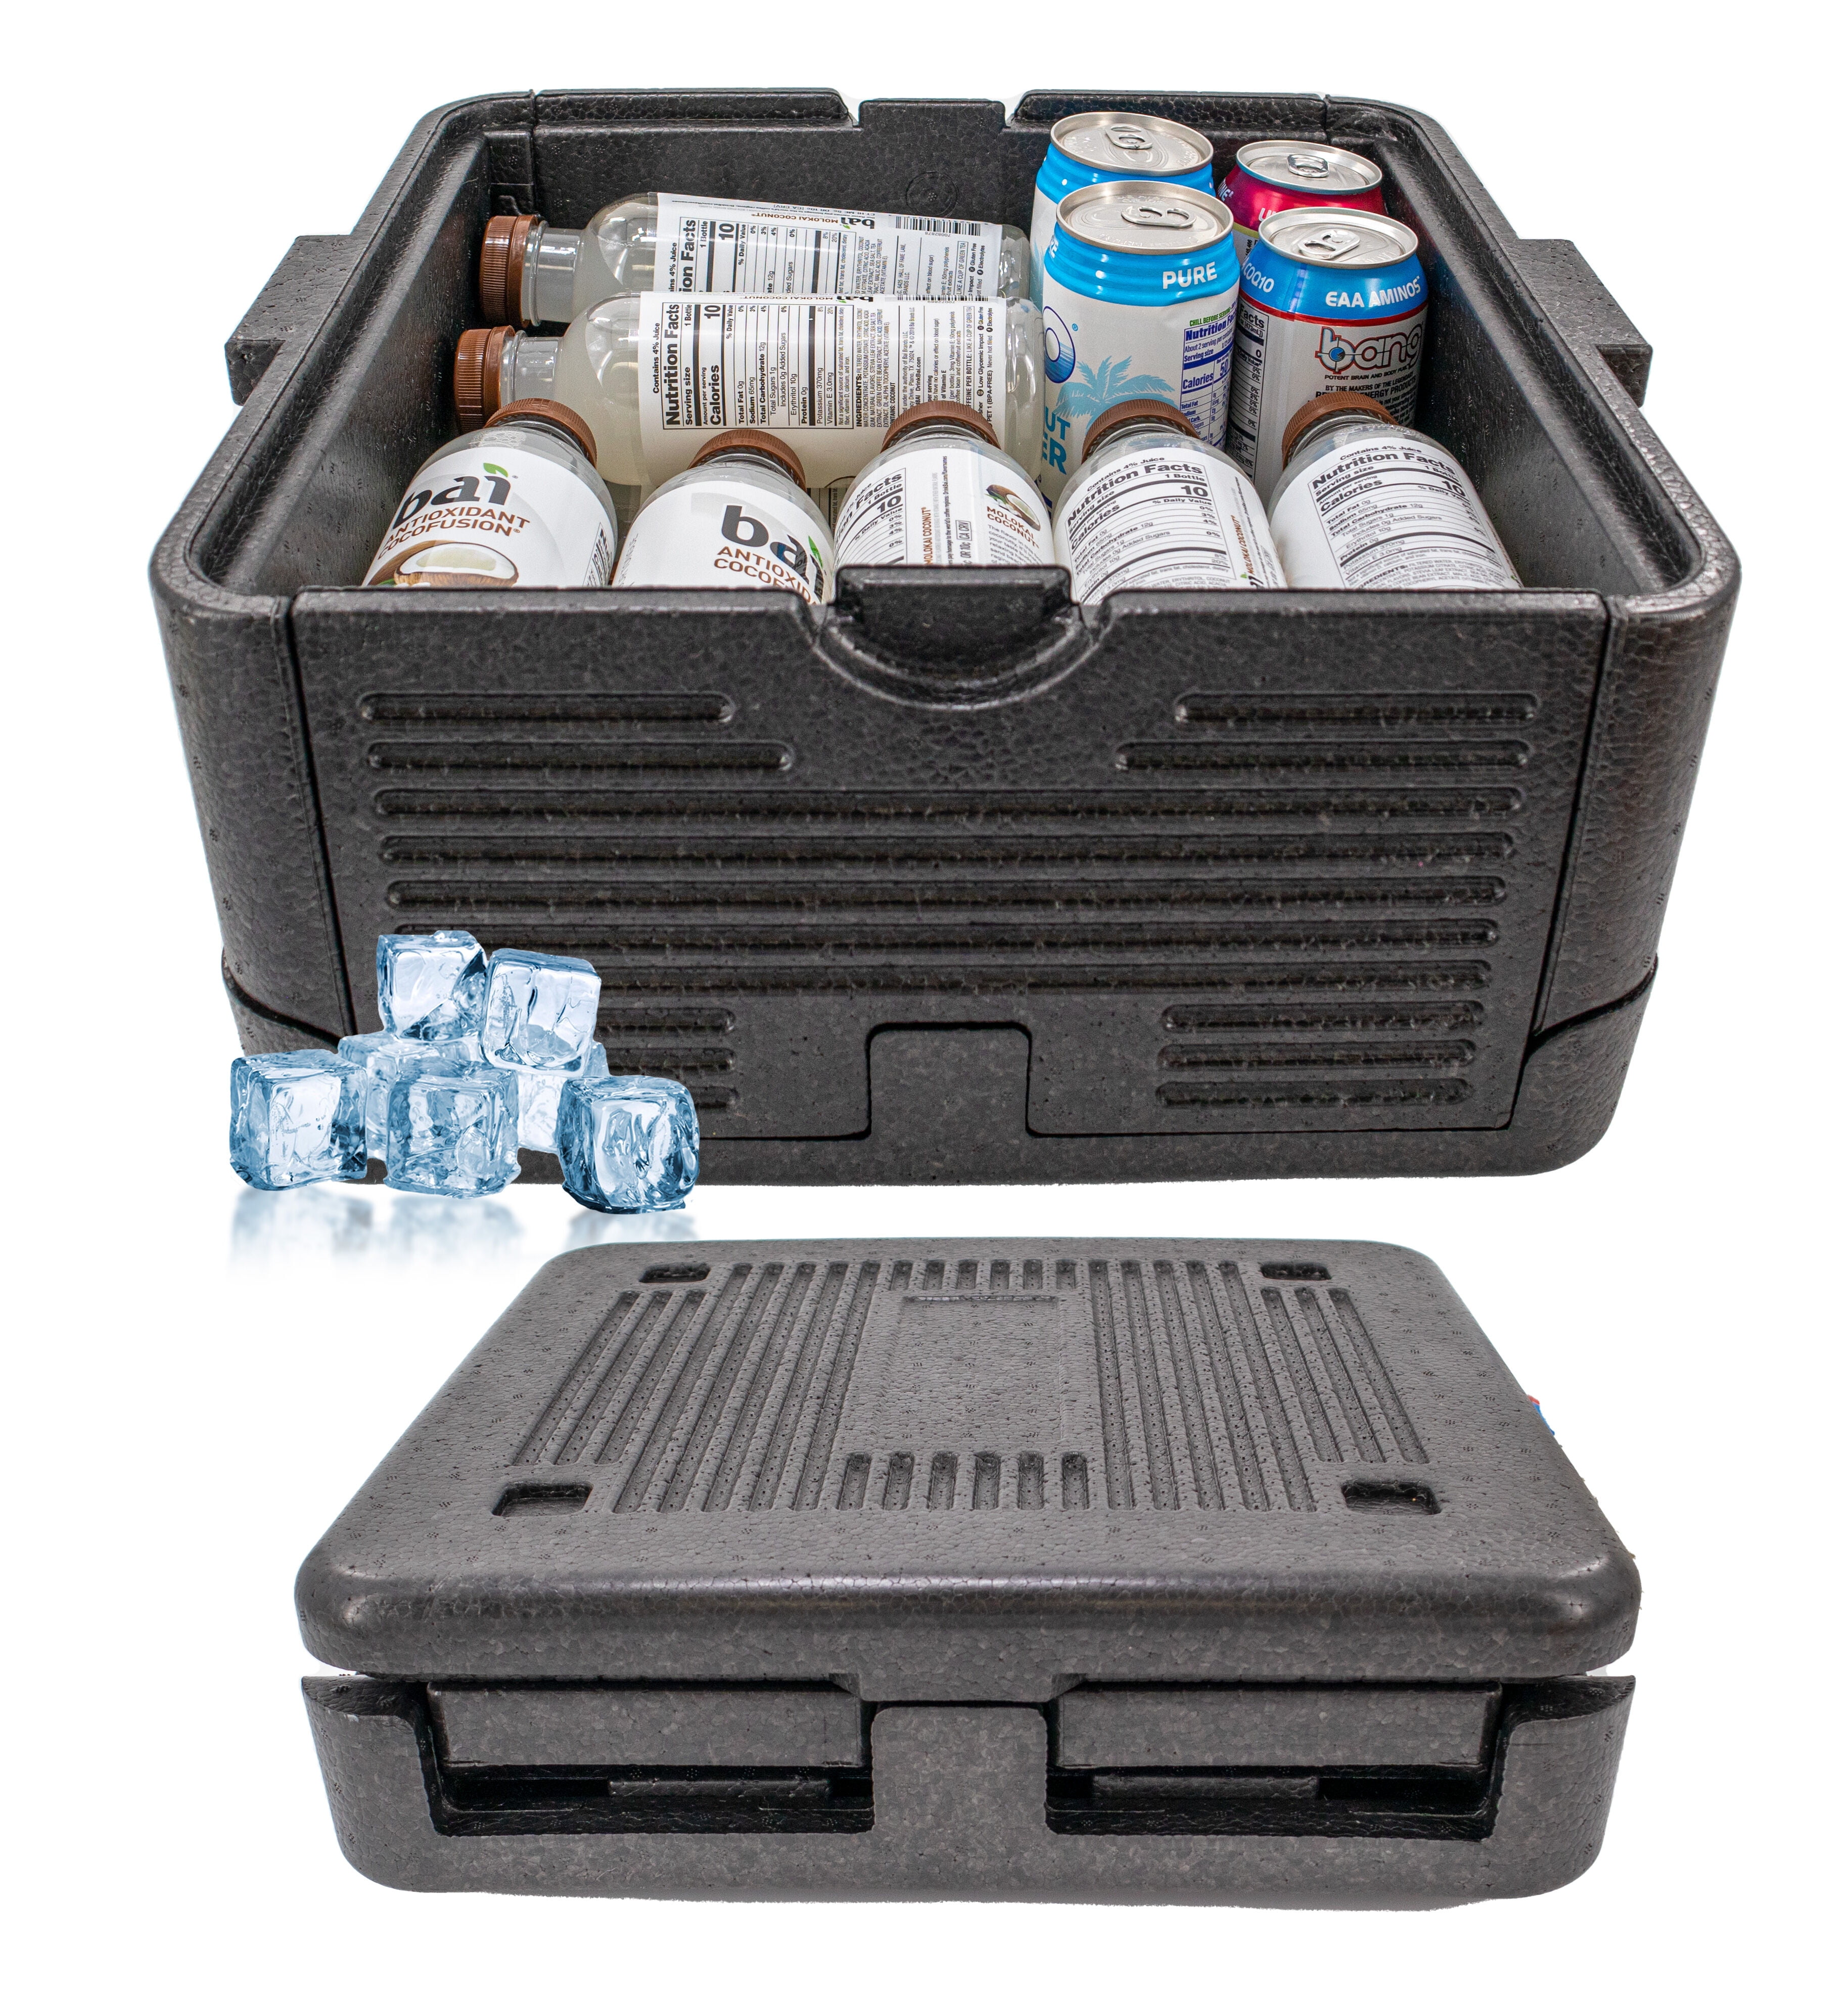 Premium styrofoam box / styrofoam box / thermo box - 7,3 l - size 5